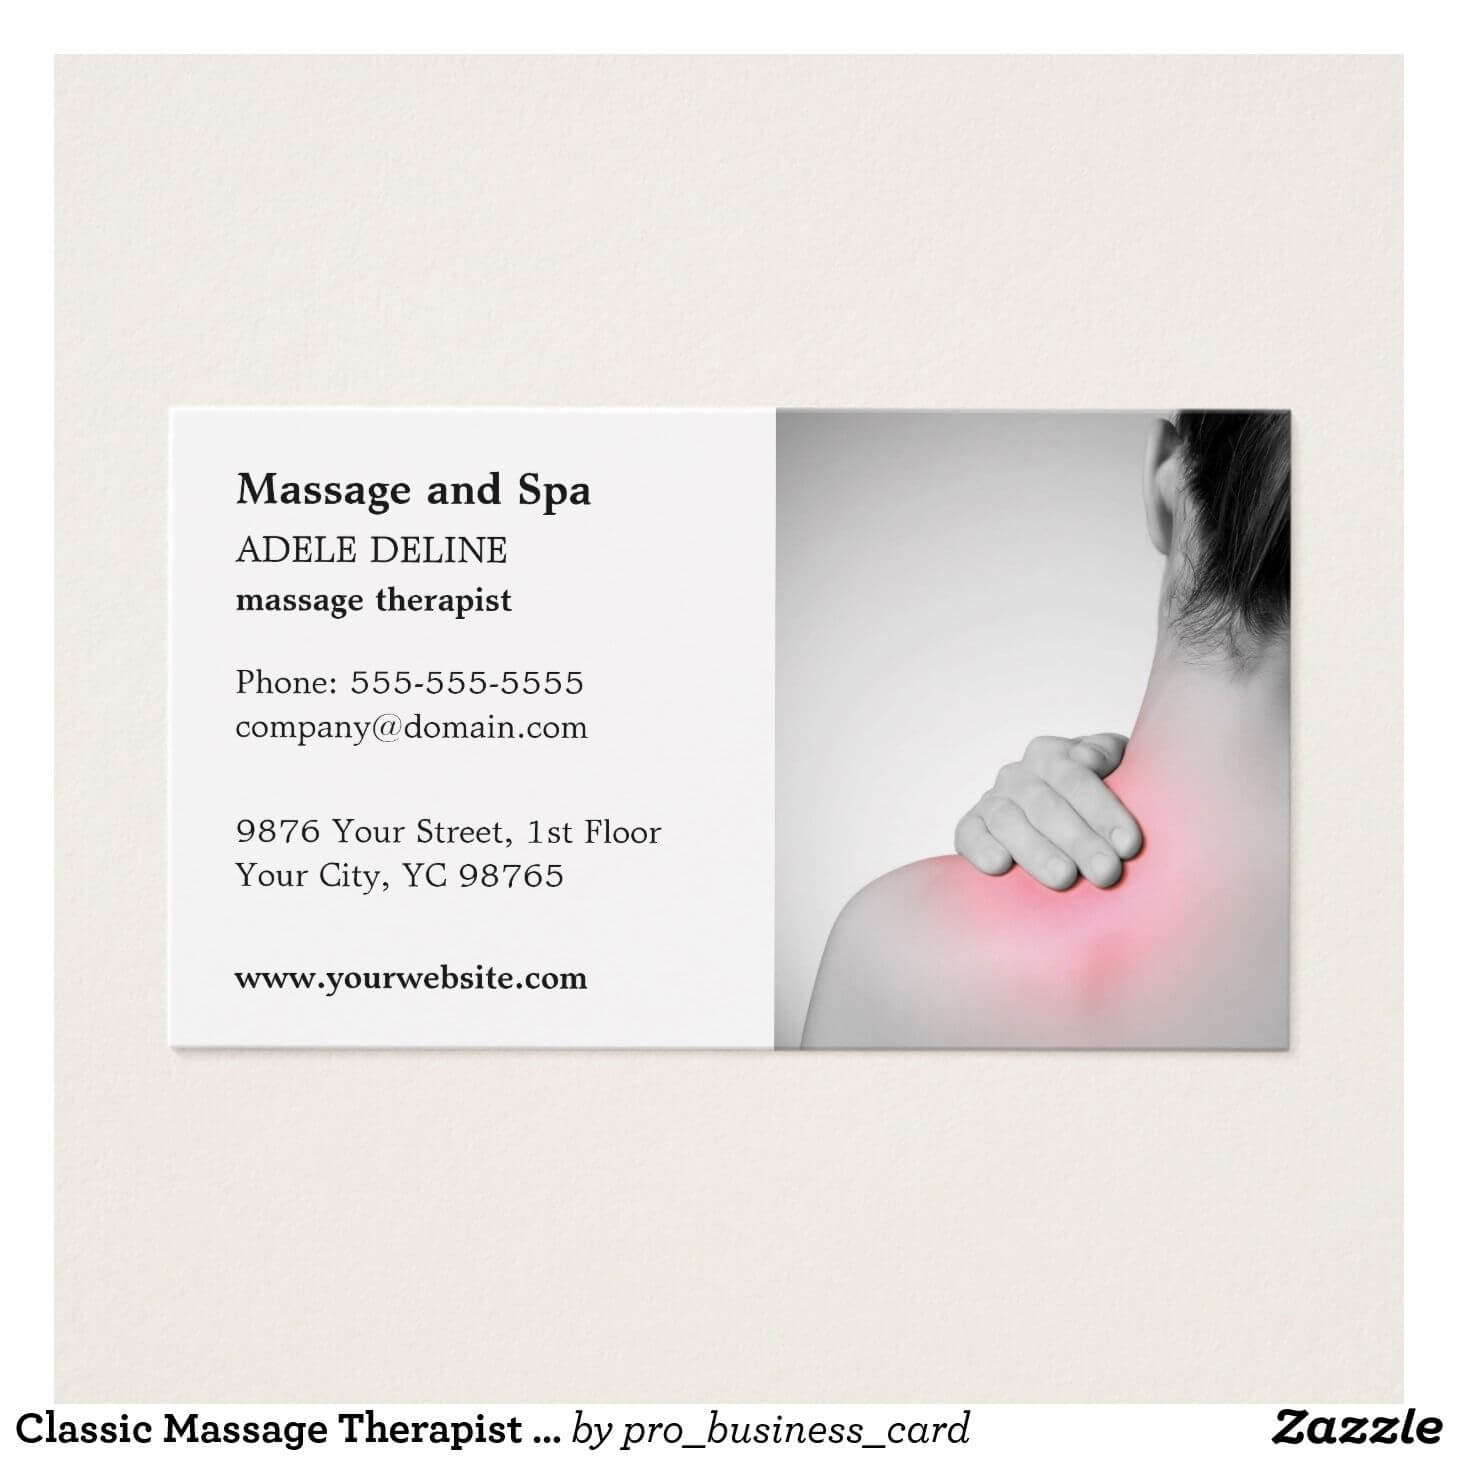 Classic Massage Therapist Business Card Template | Business In Massage Therapy Business Card Templates